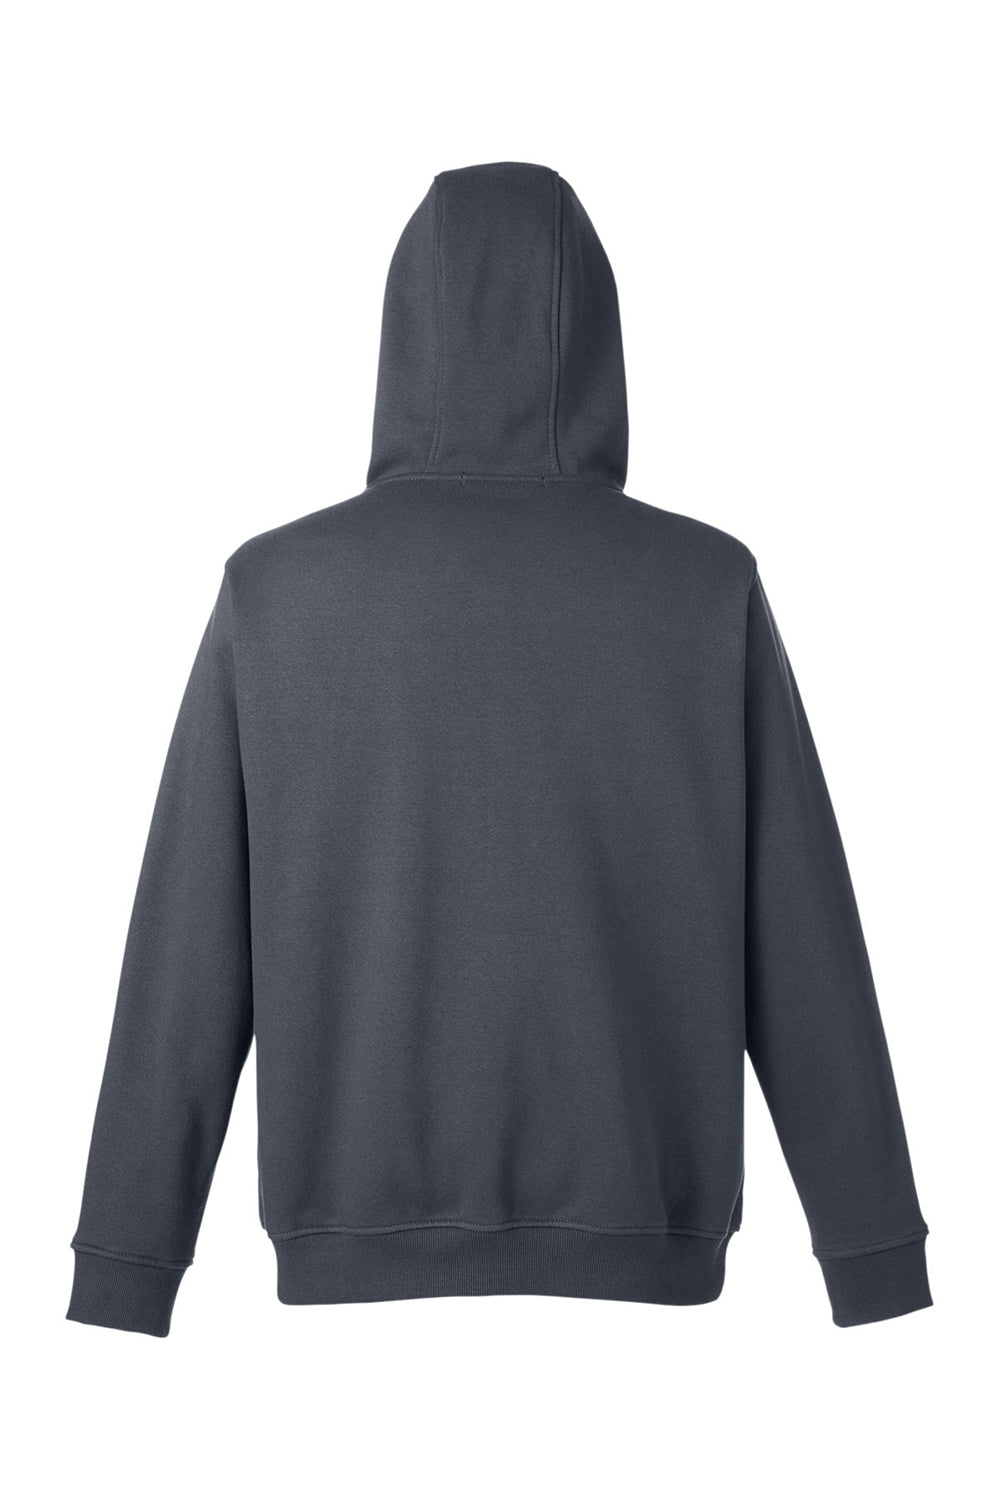 Harriton M711/M711T Mens Climabloc Full Zip Hooded Sweatshirt Hoodie Dark Charcoal Grey Flat Back